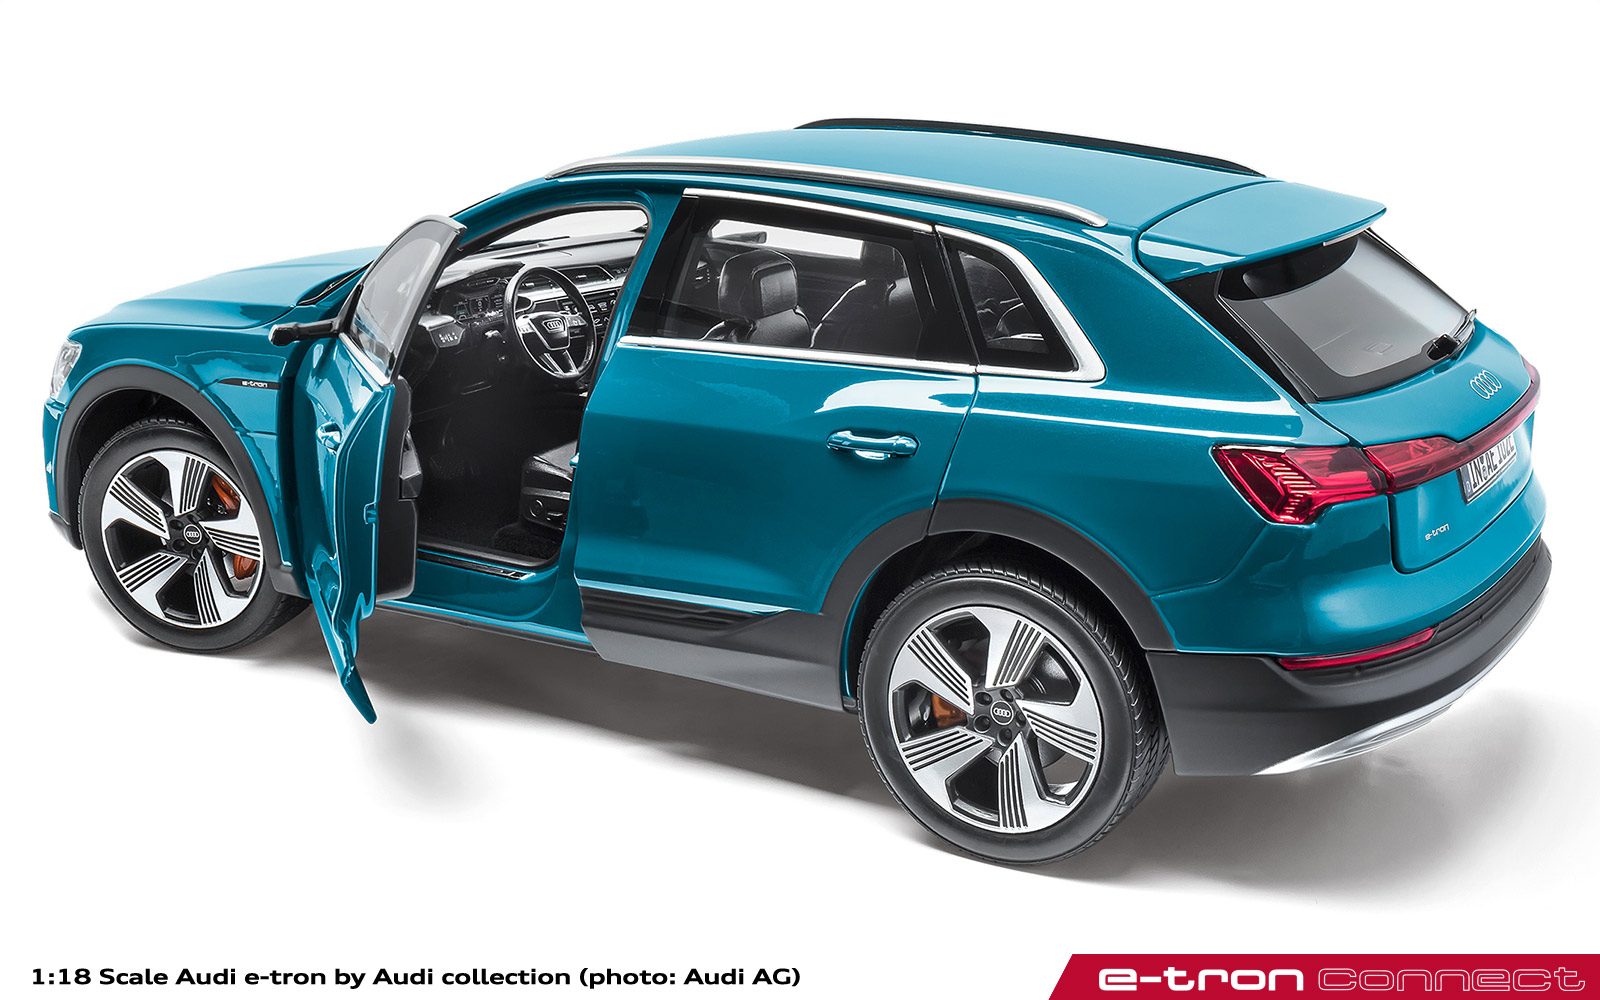 Choice Gear: Audi e-tron Models In Miniature - e-tron connect